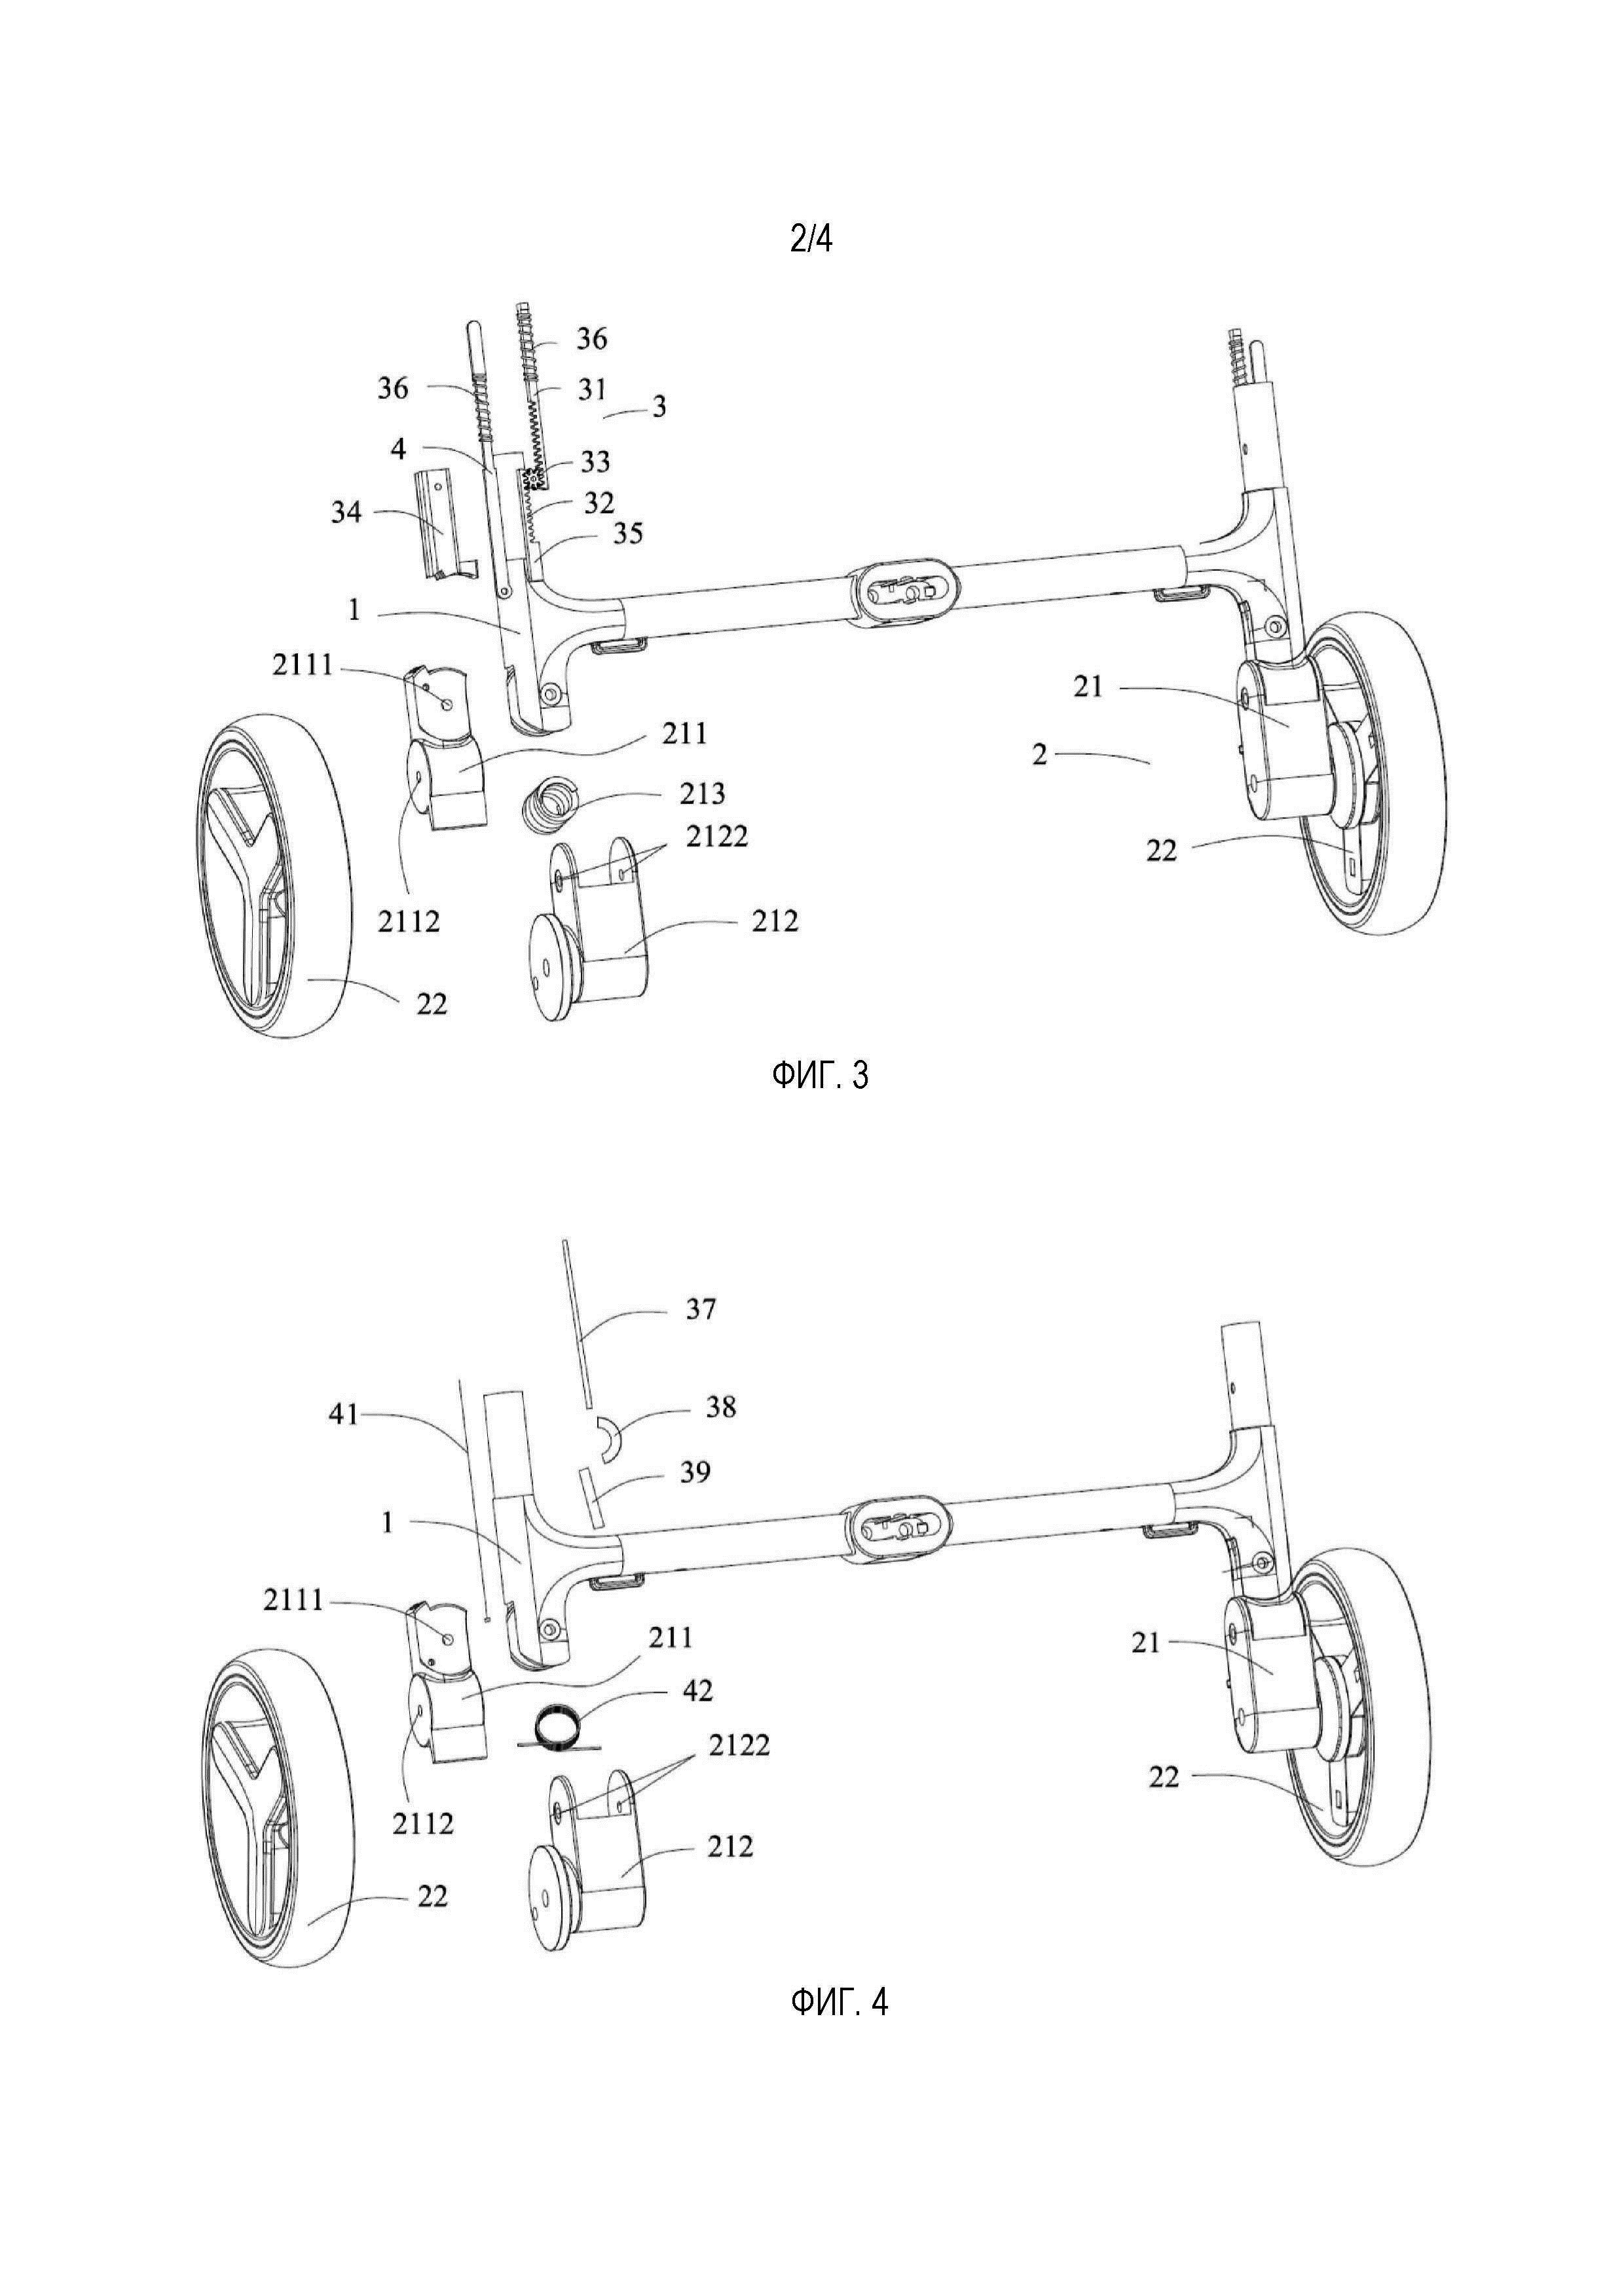 Механизм откидывания колеса и рама тележки